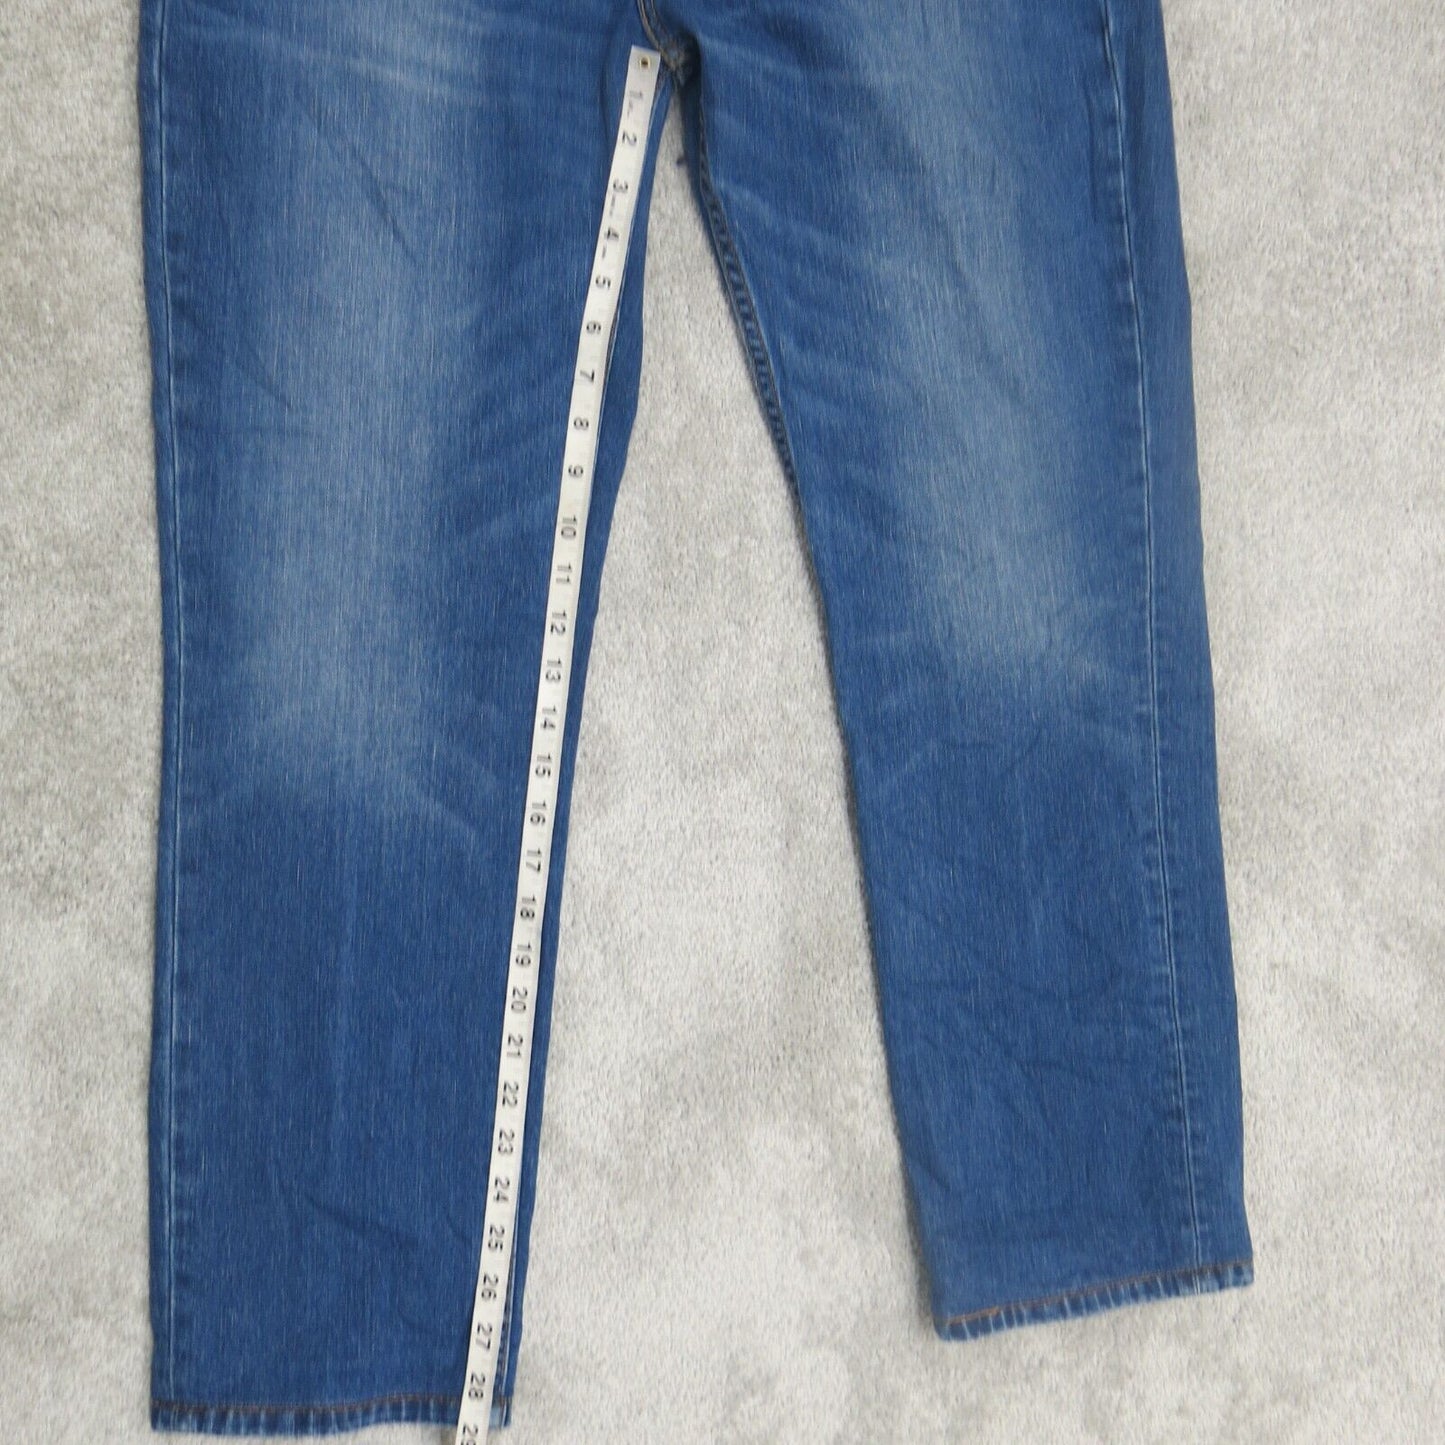 Levi Strauss Mens Skinny Jeans Straight Leg Relaxed Fit Denim Blue Size W38XL32